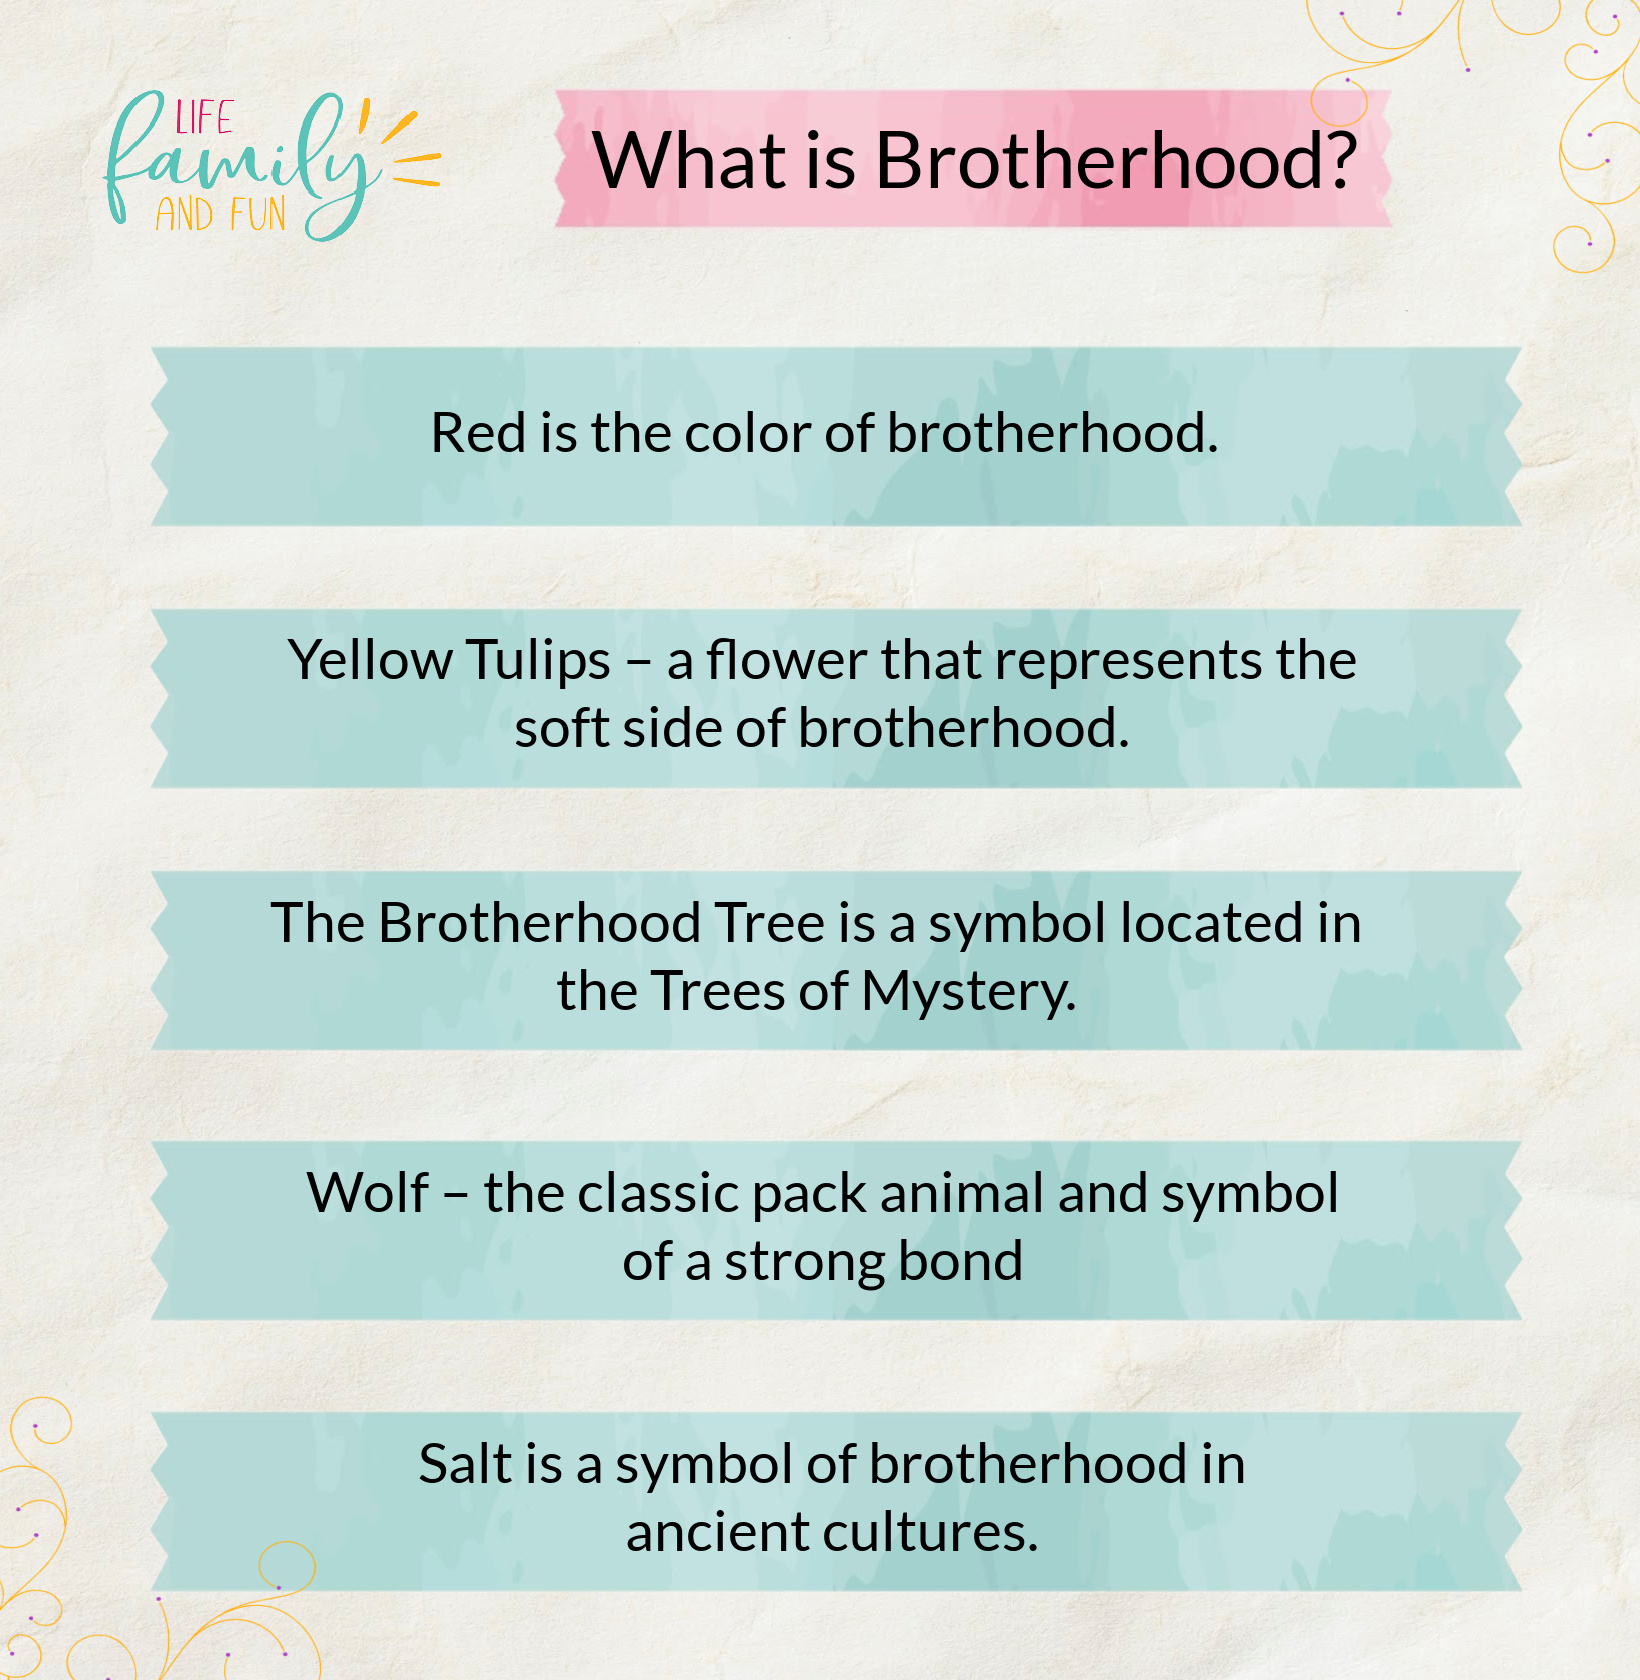 What is Brotherhood?